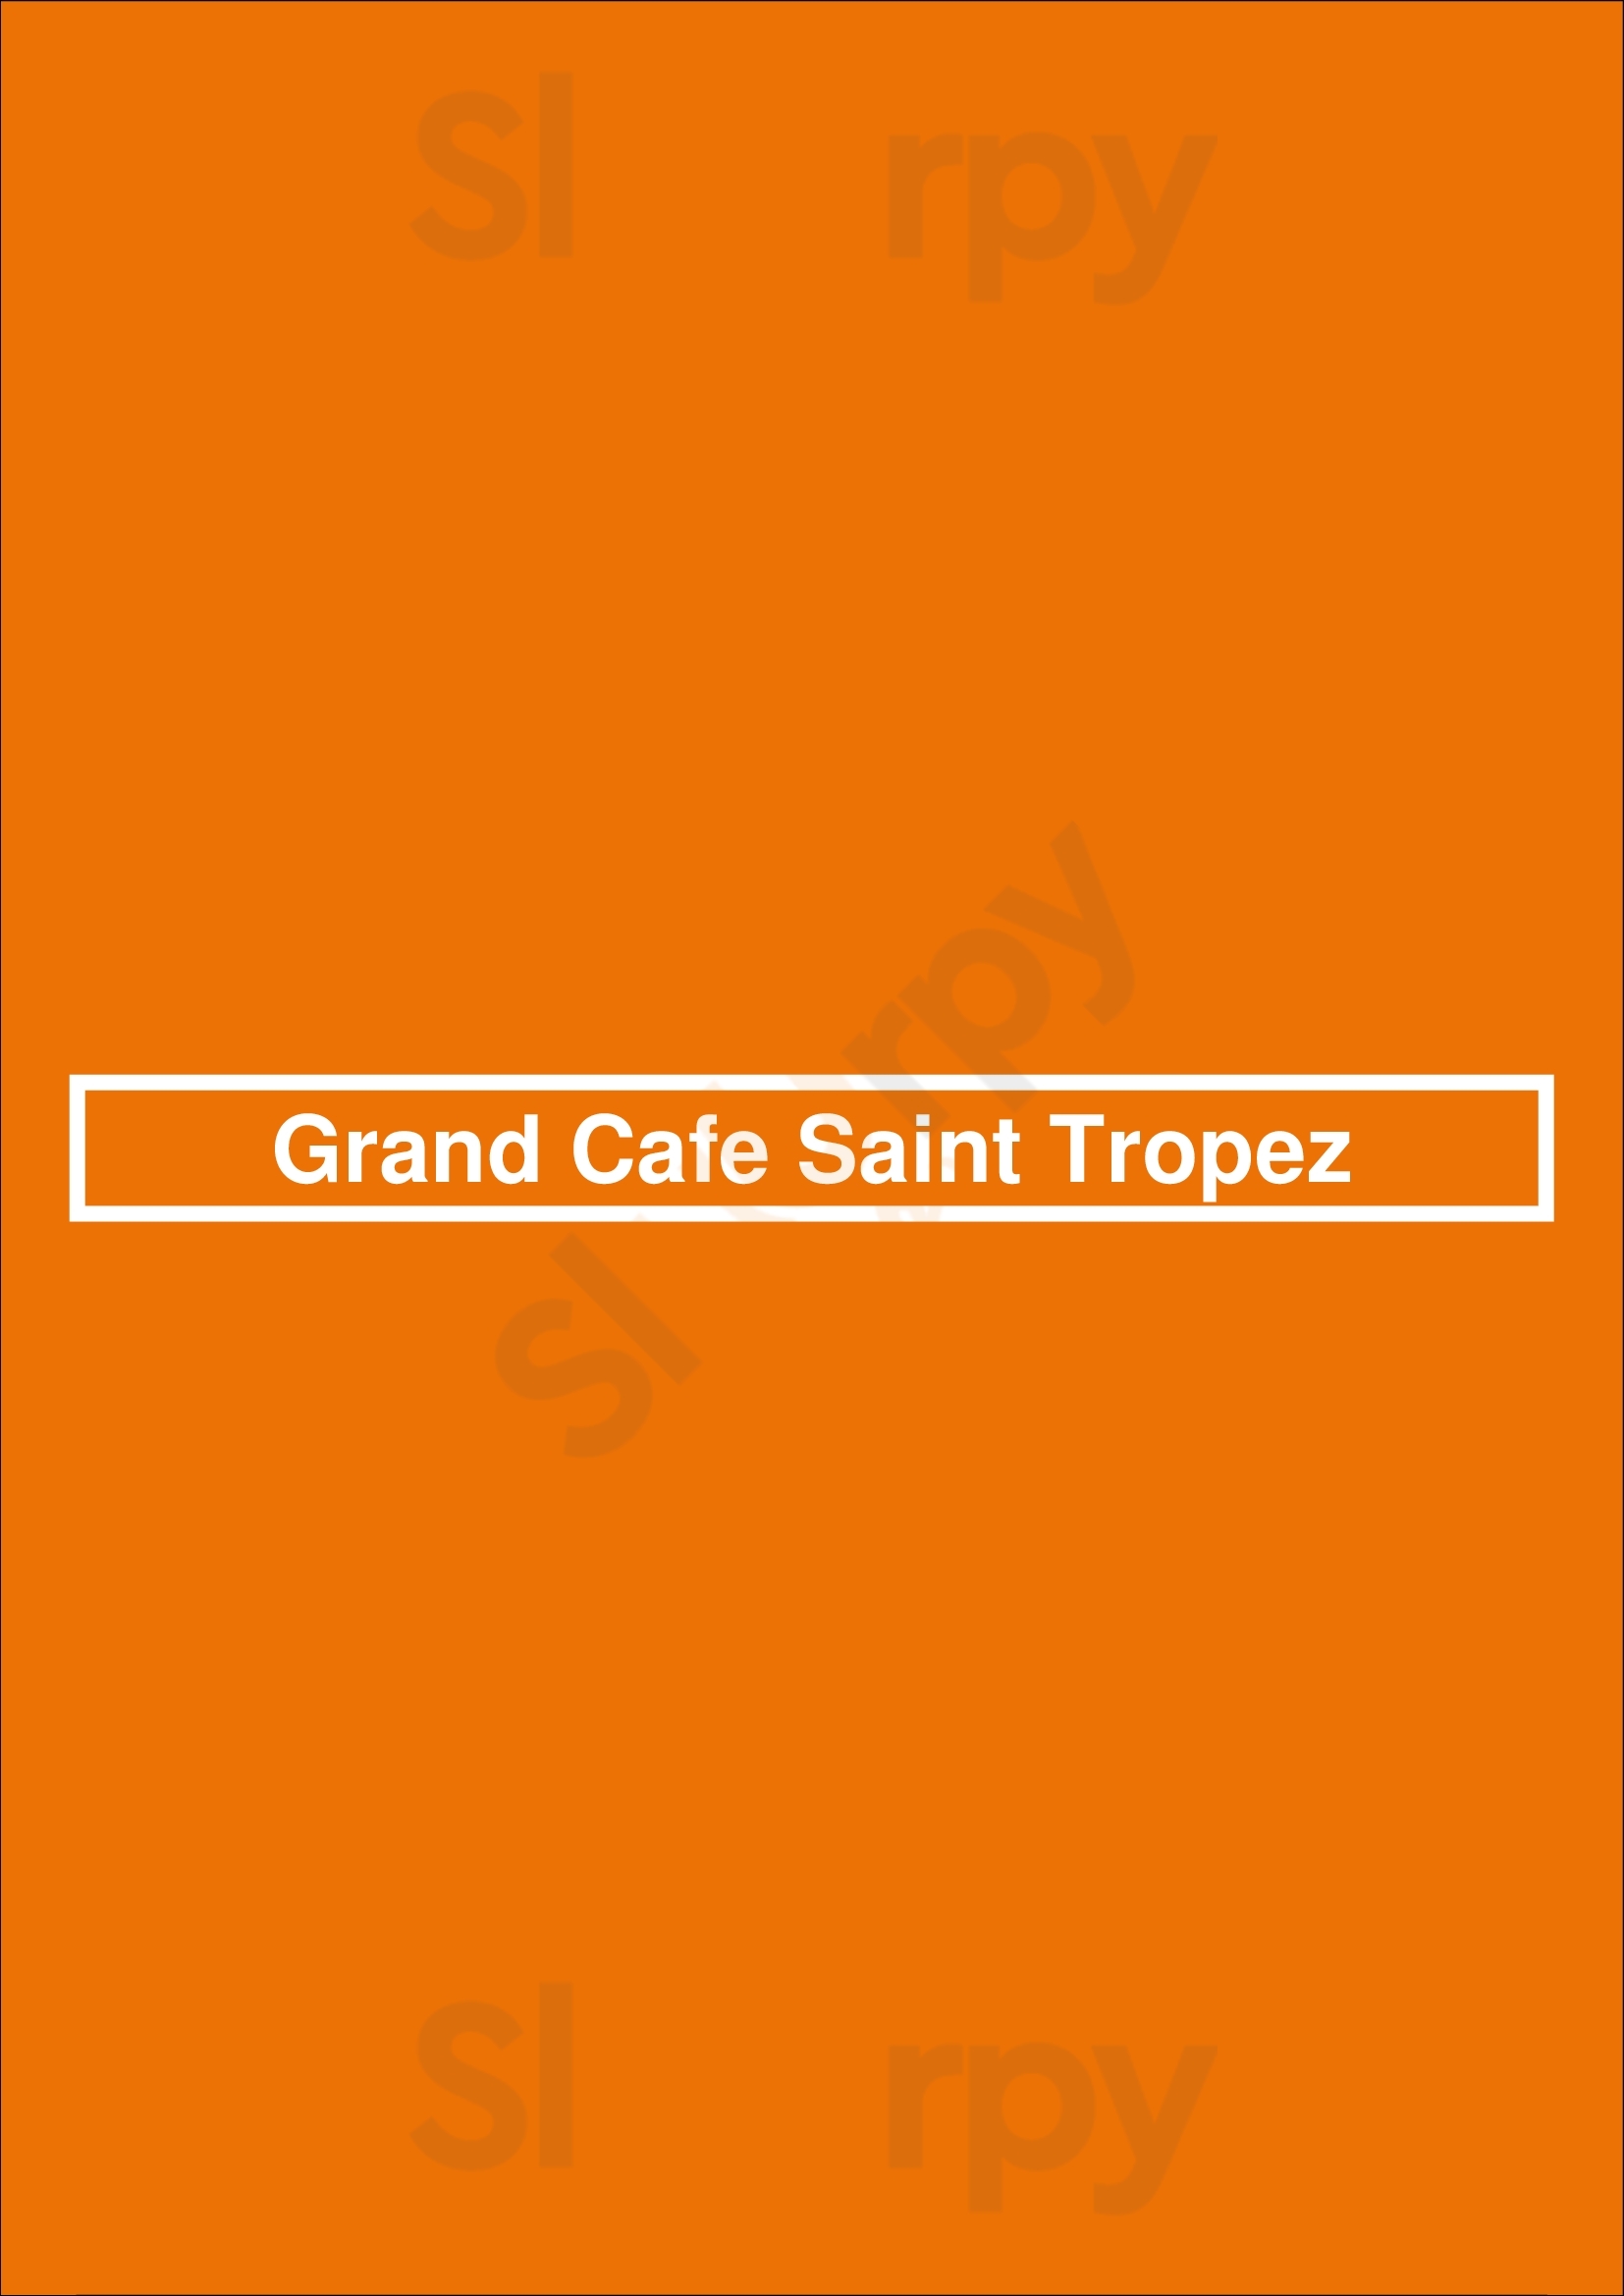 Grand Cafe Saint Tropez Veldhoven Menu - 1